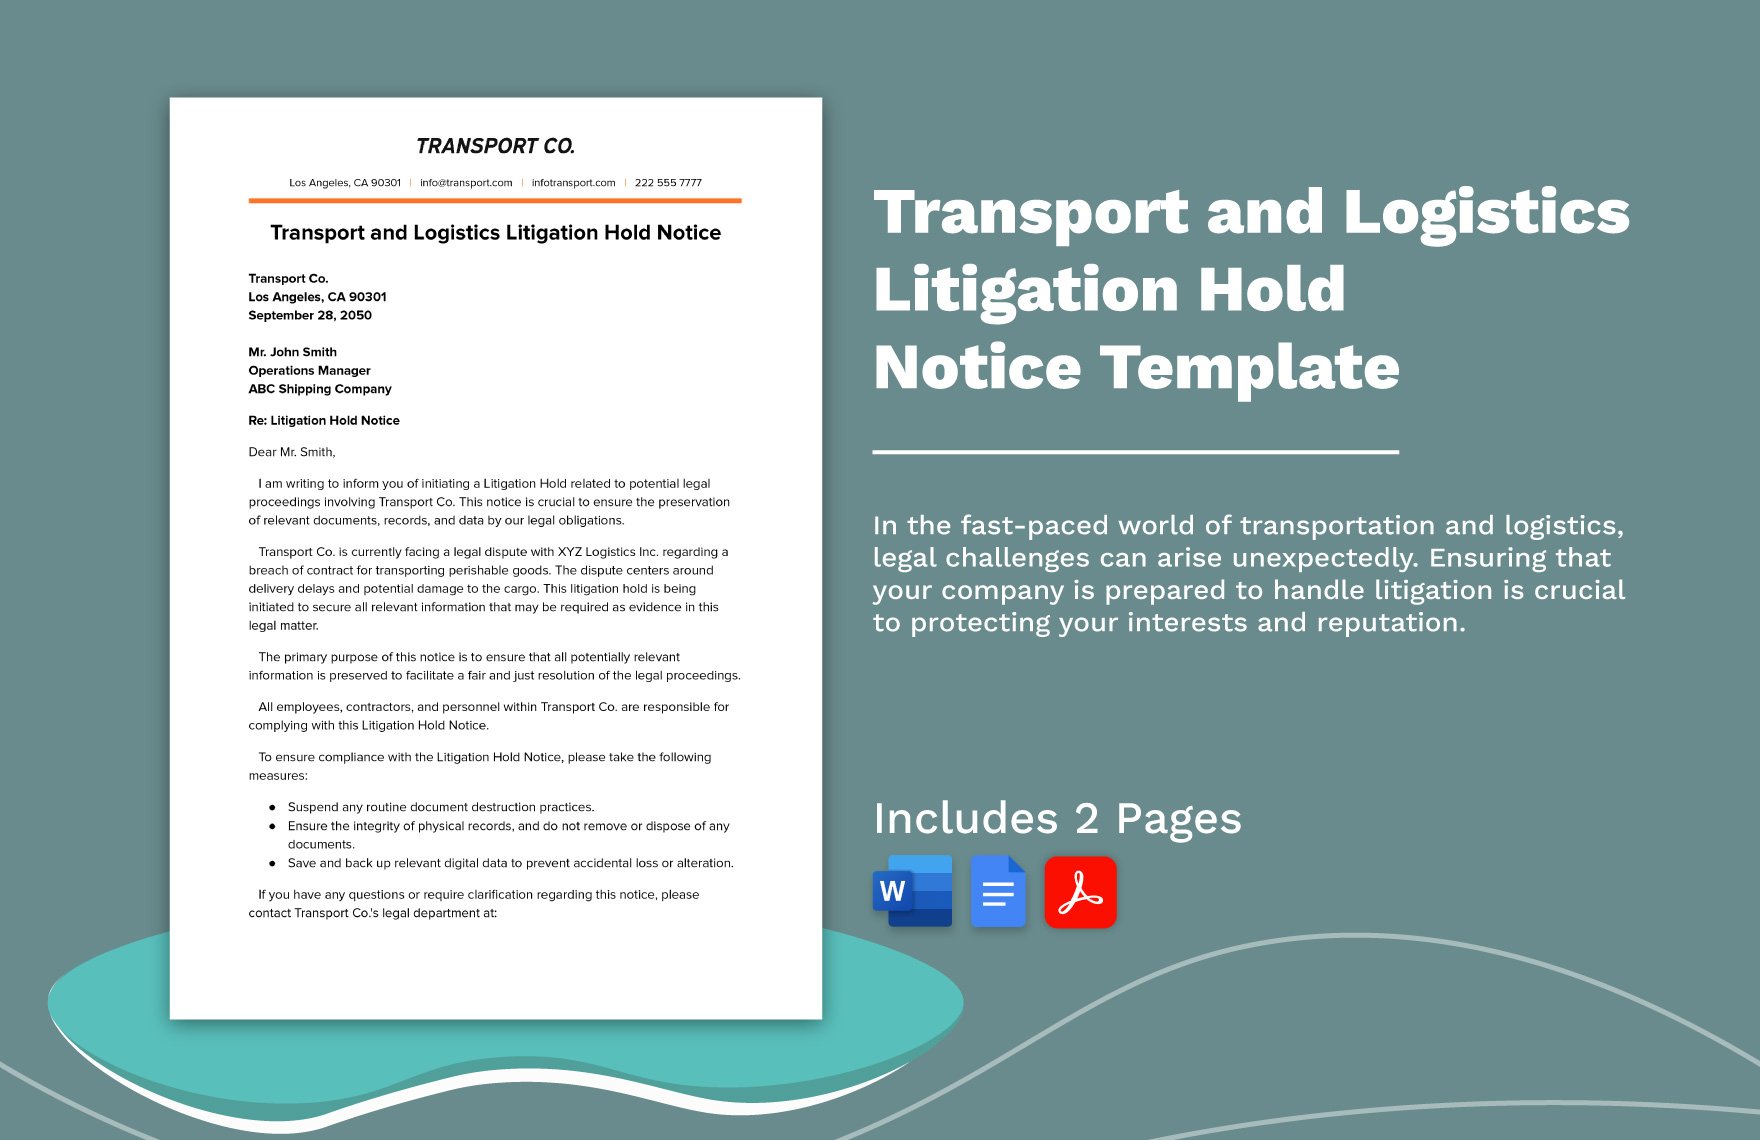 Transport and Logistics Litigation Hold Notice Template